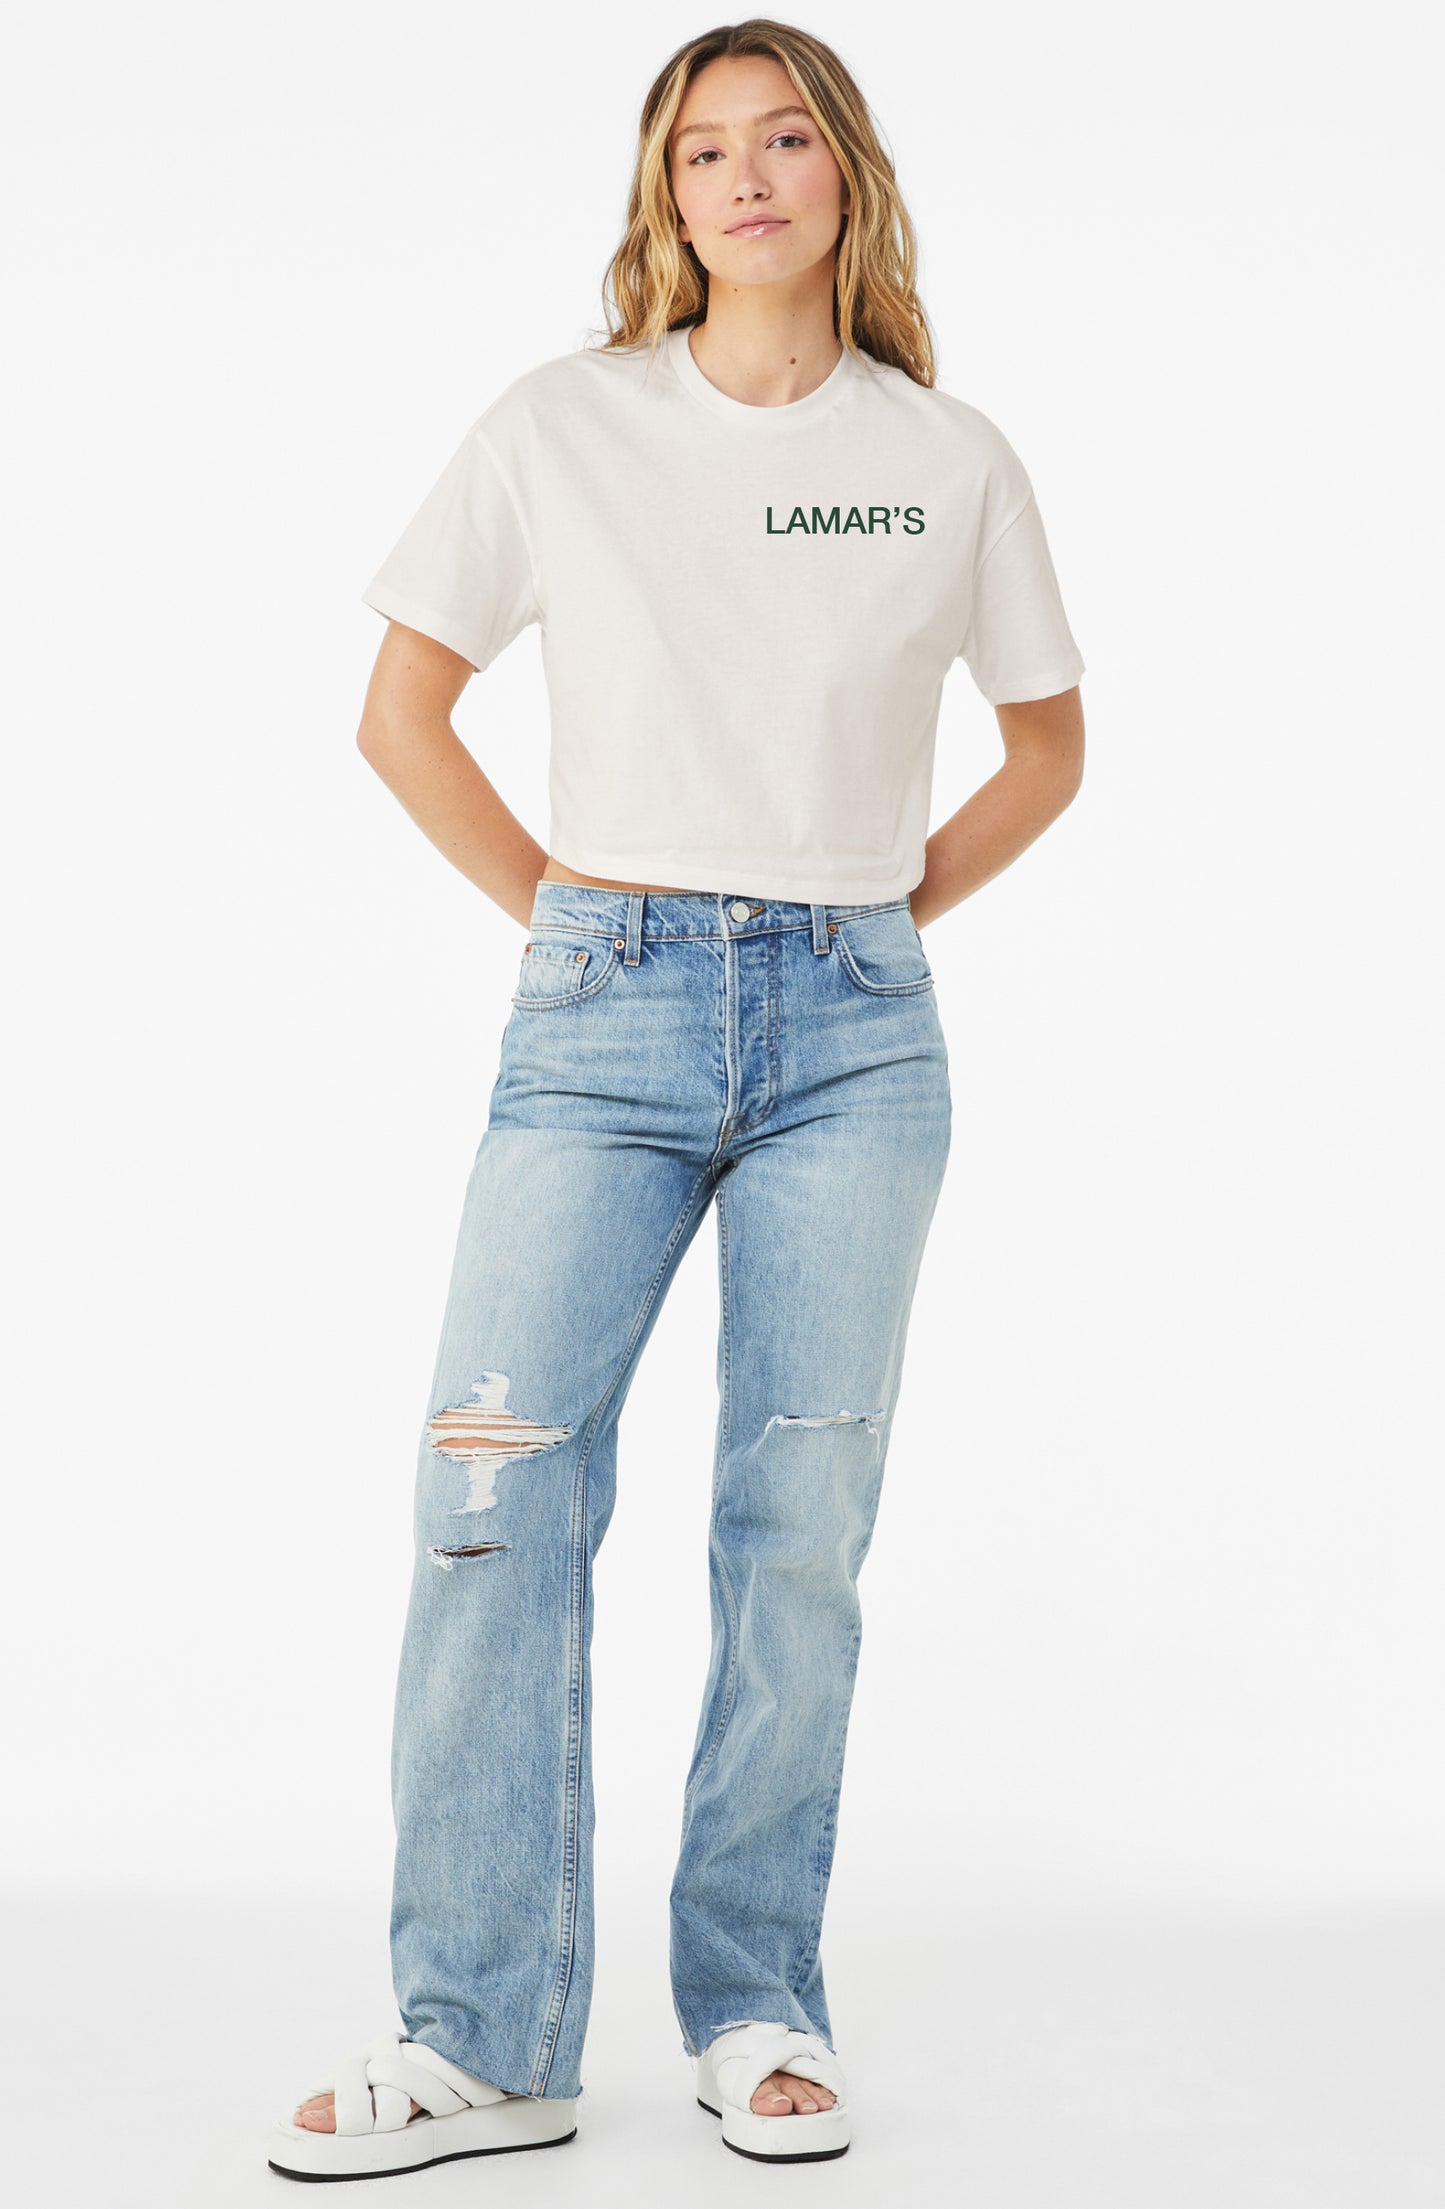 White Unisex Lamar's T-Shirt